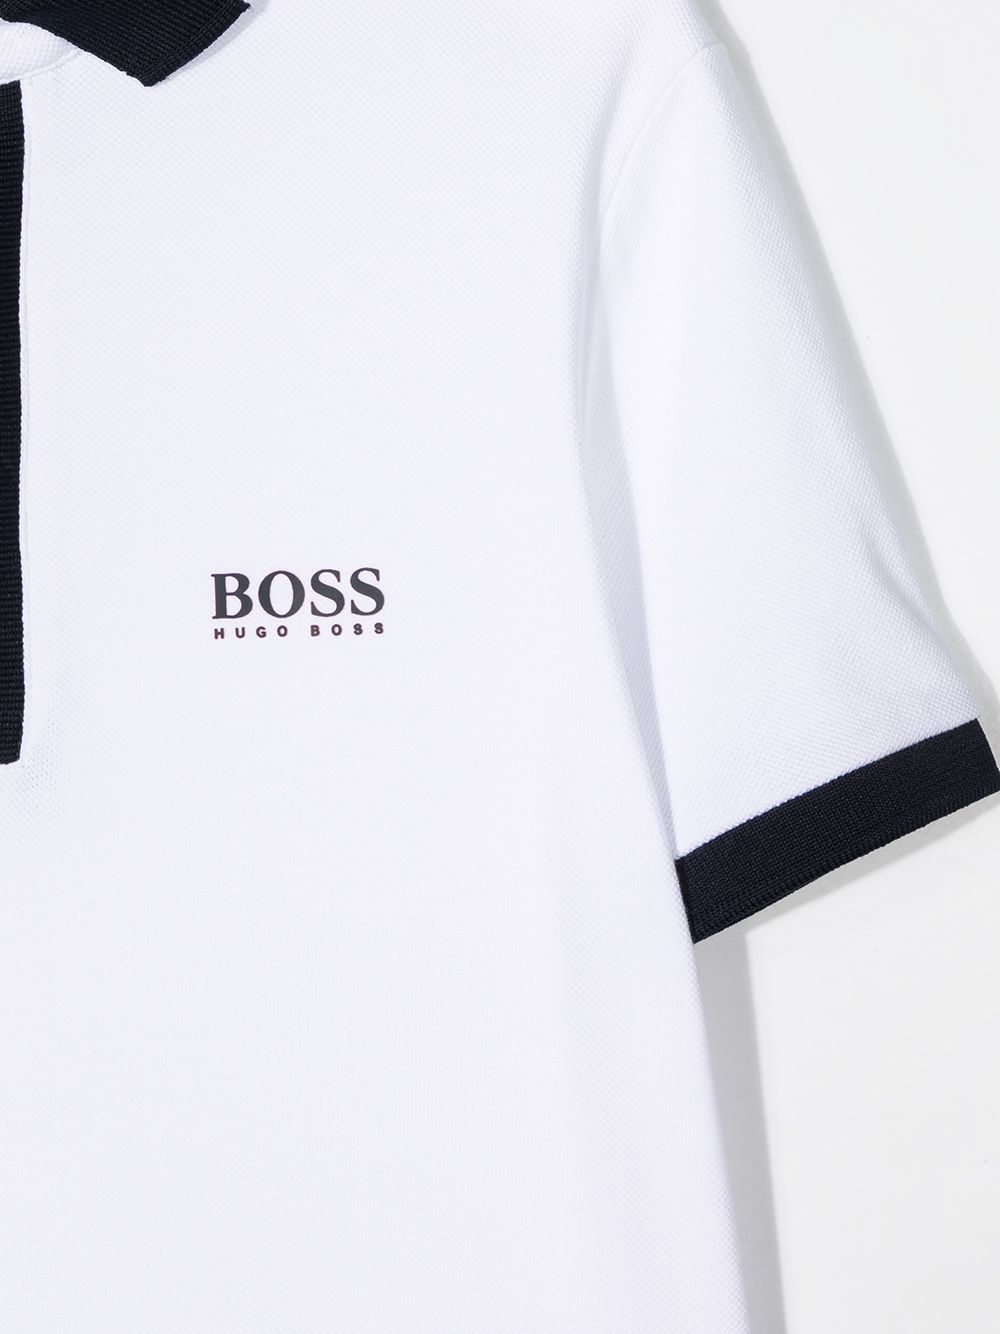 BOSS KIDS Contrast-trimmed polo shirt White/Navy - MAISONDEFASHION.COM